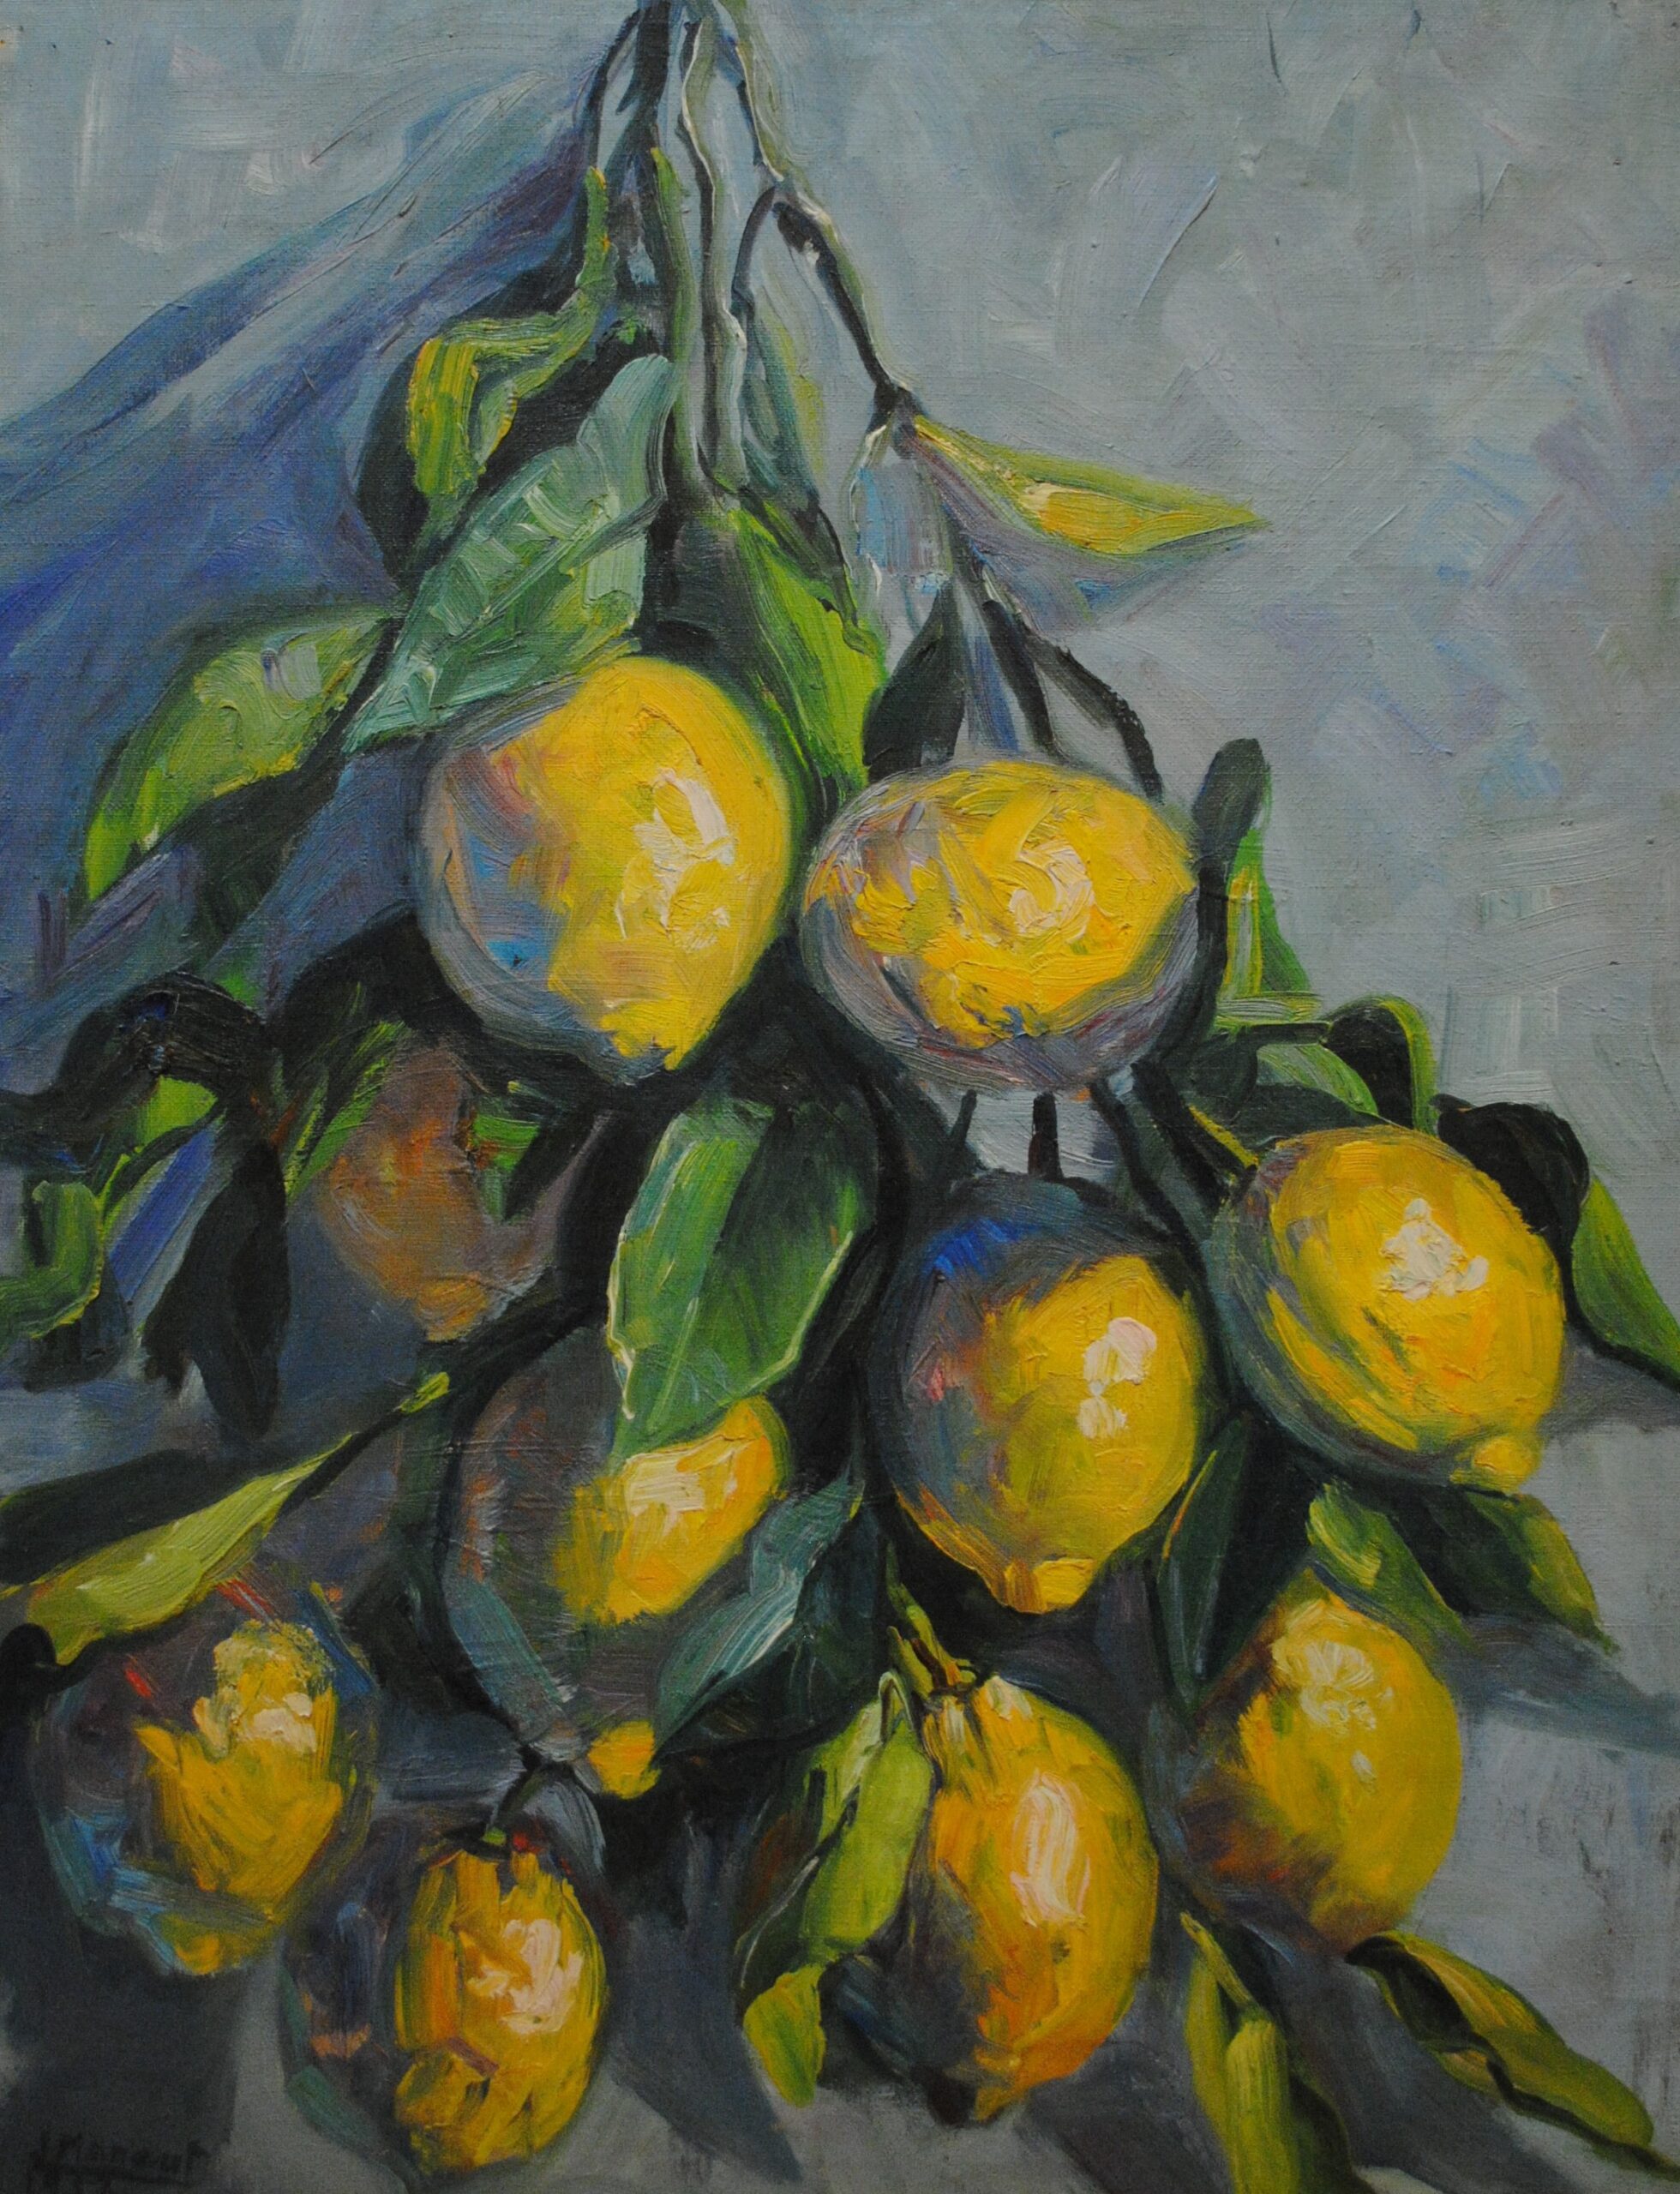 Pintura de José Manaut titulada Limones, 1958. Óleo sobre lienzo.